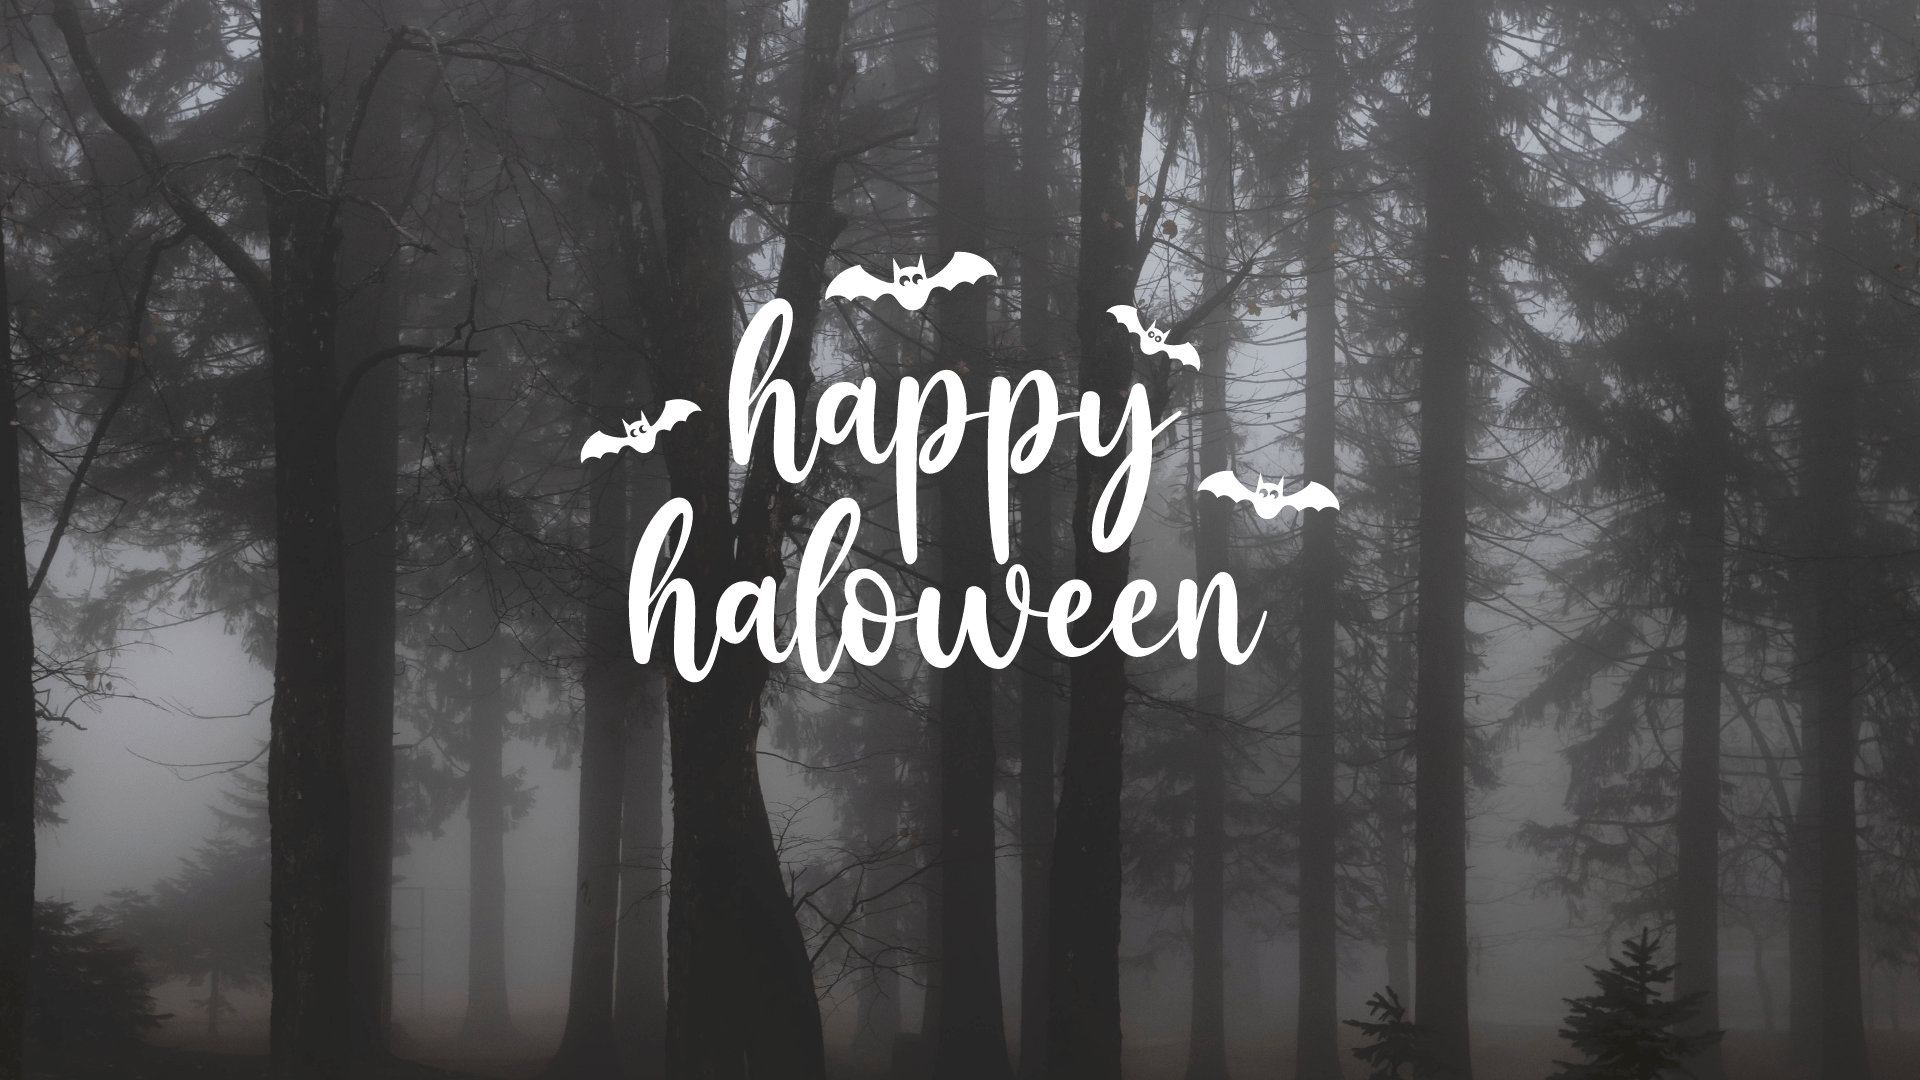 Halloween forest background with bats and text - Halloween desktop, Halloween, calligraphy